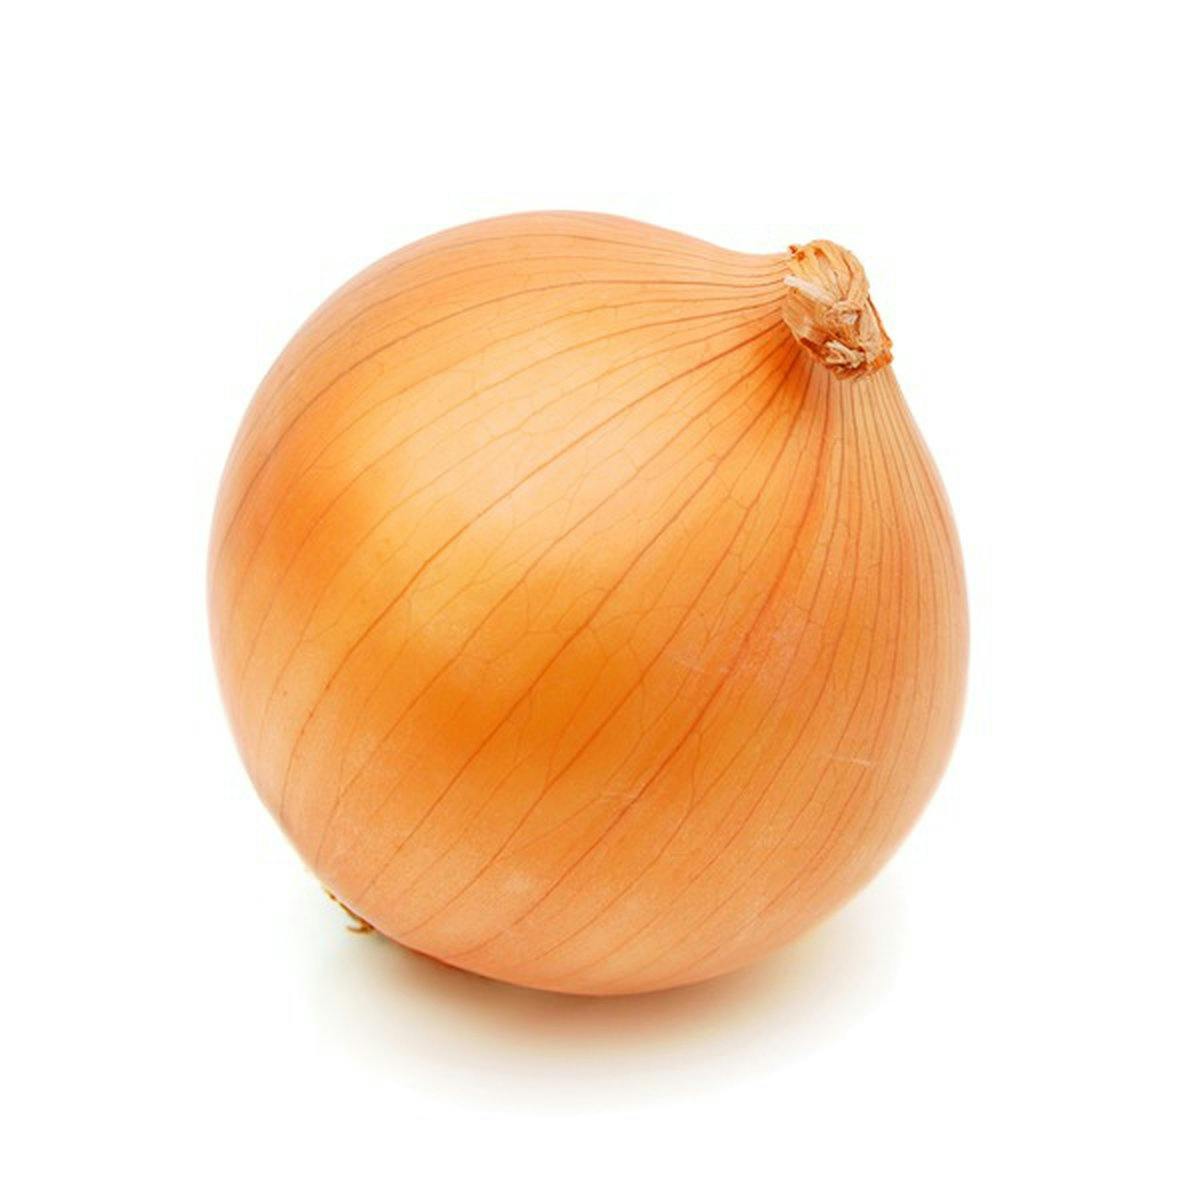 yellow onion diced